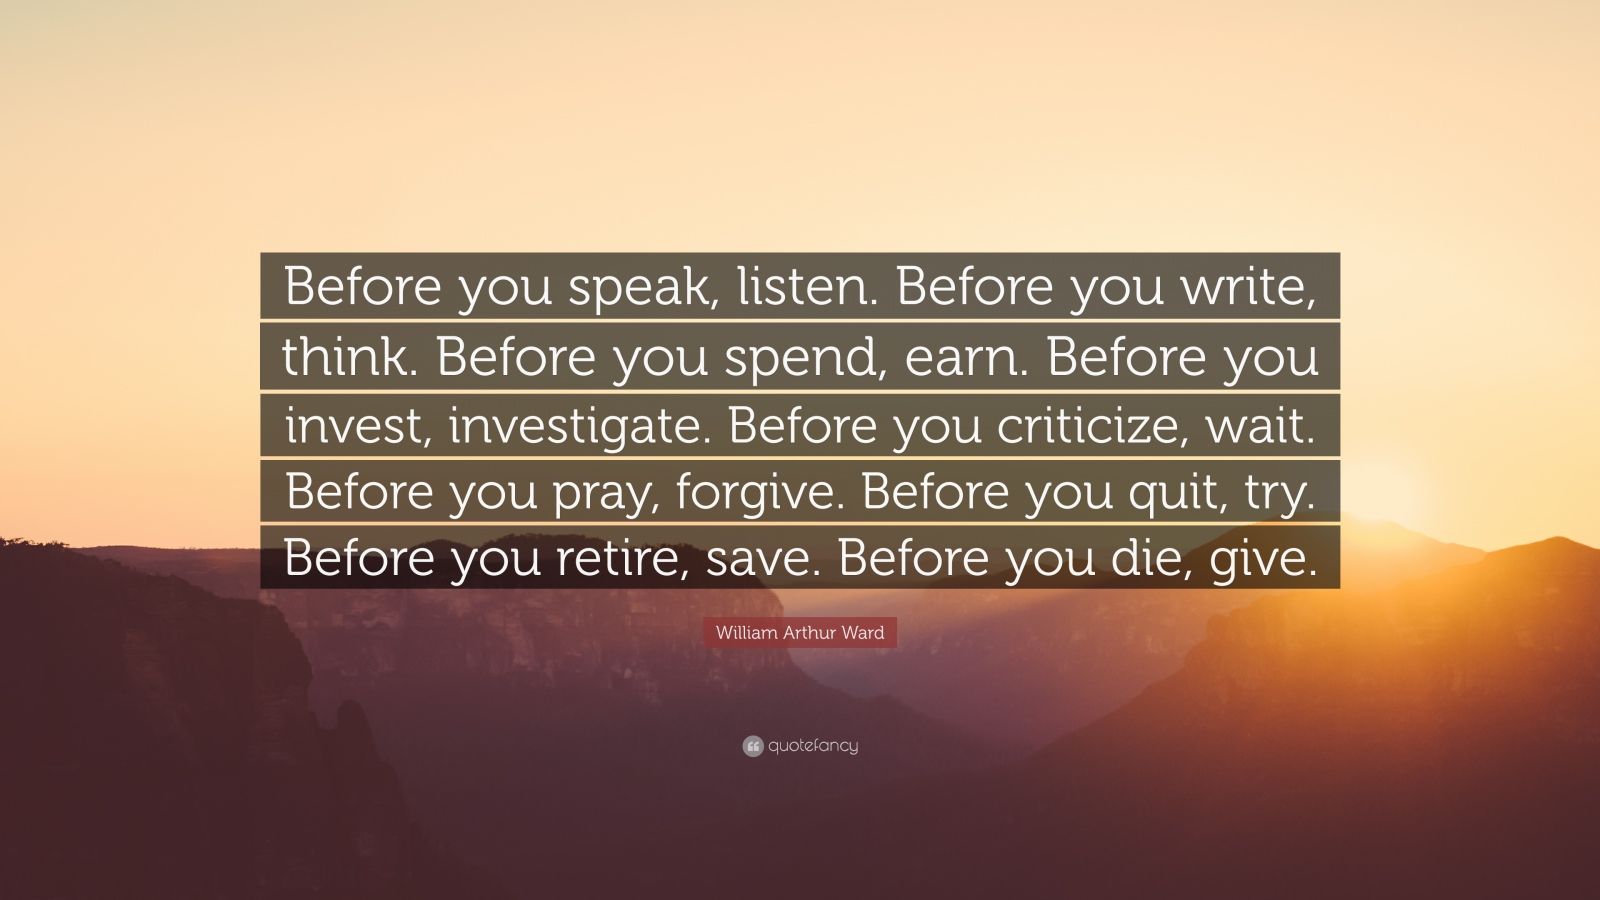 William Arthur Ward Quote “Before you speak, listen